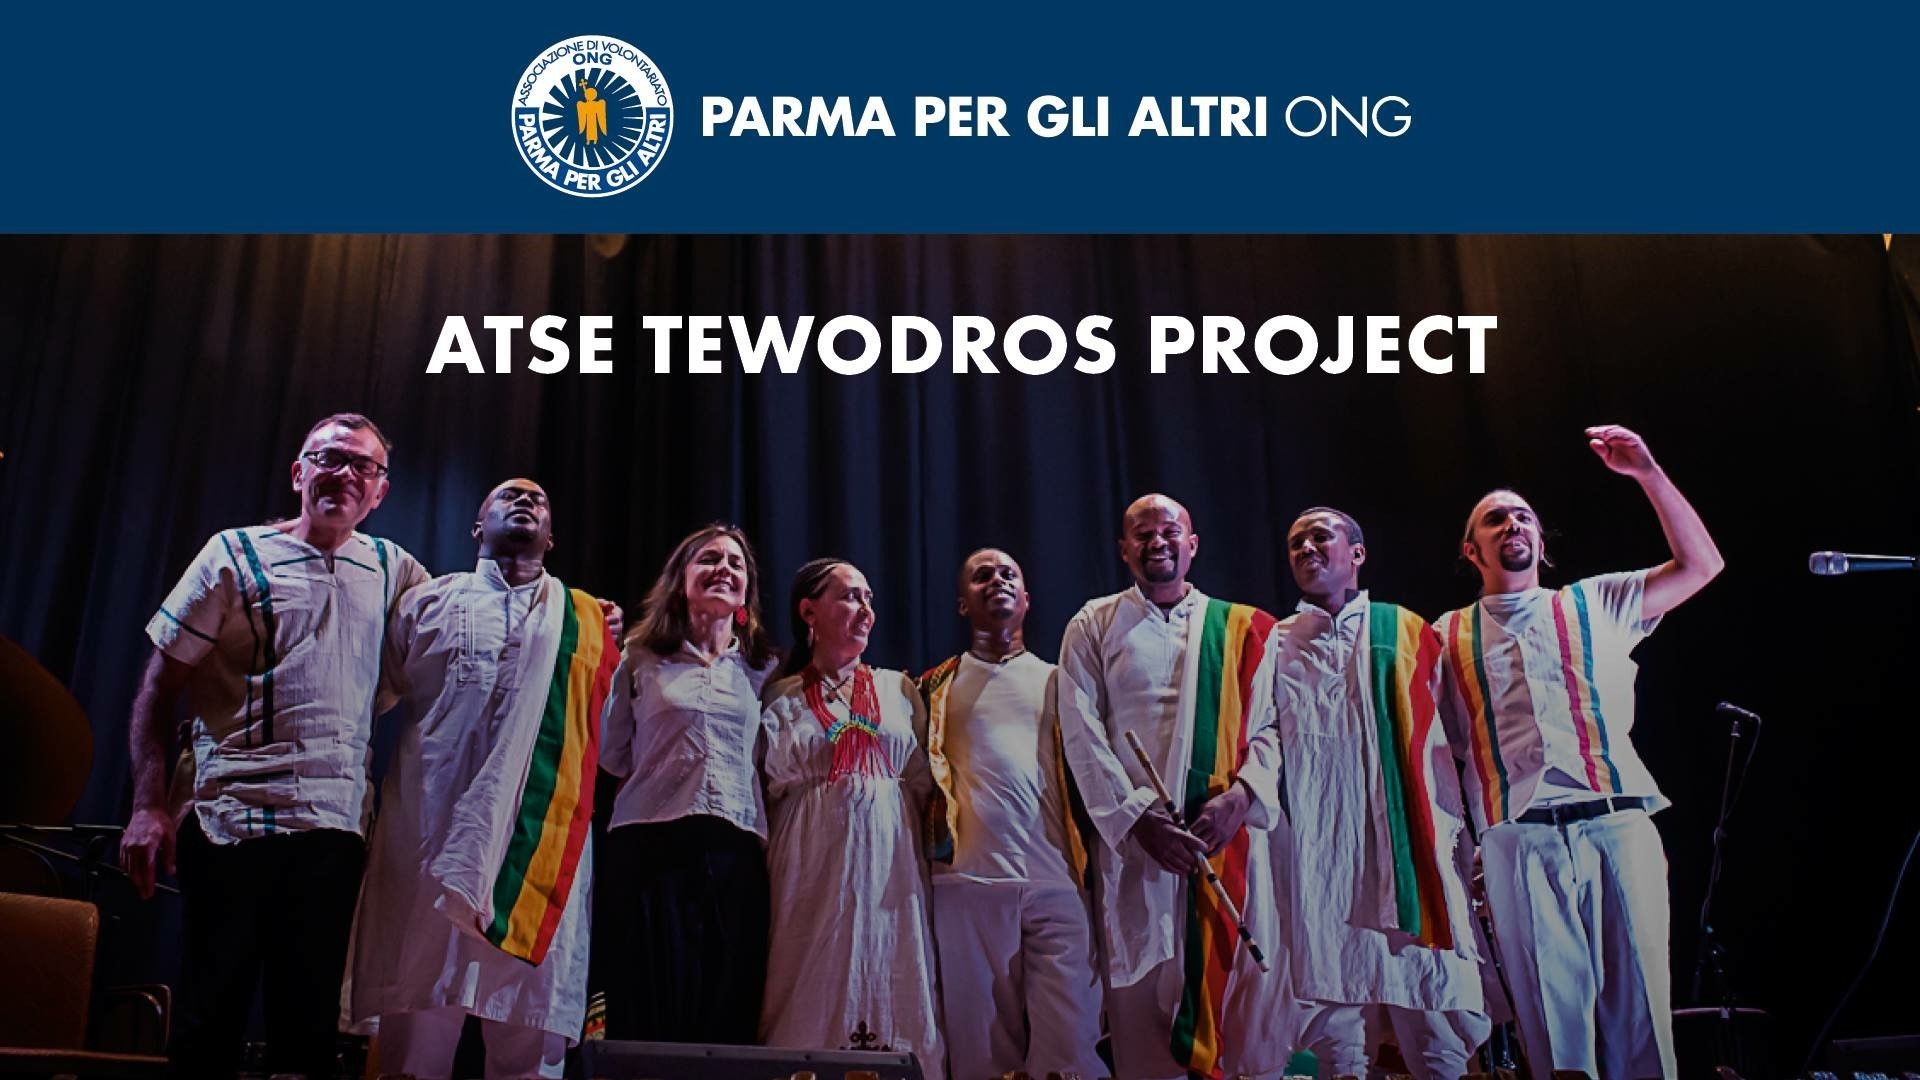 ATSE TEWODROS PROJECT  Una serata all’insegna di grande musica, cultura e solidarietà per l’Etiopia.